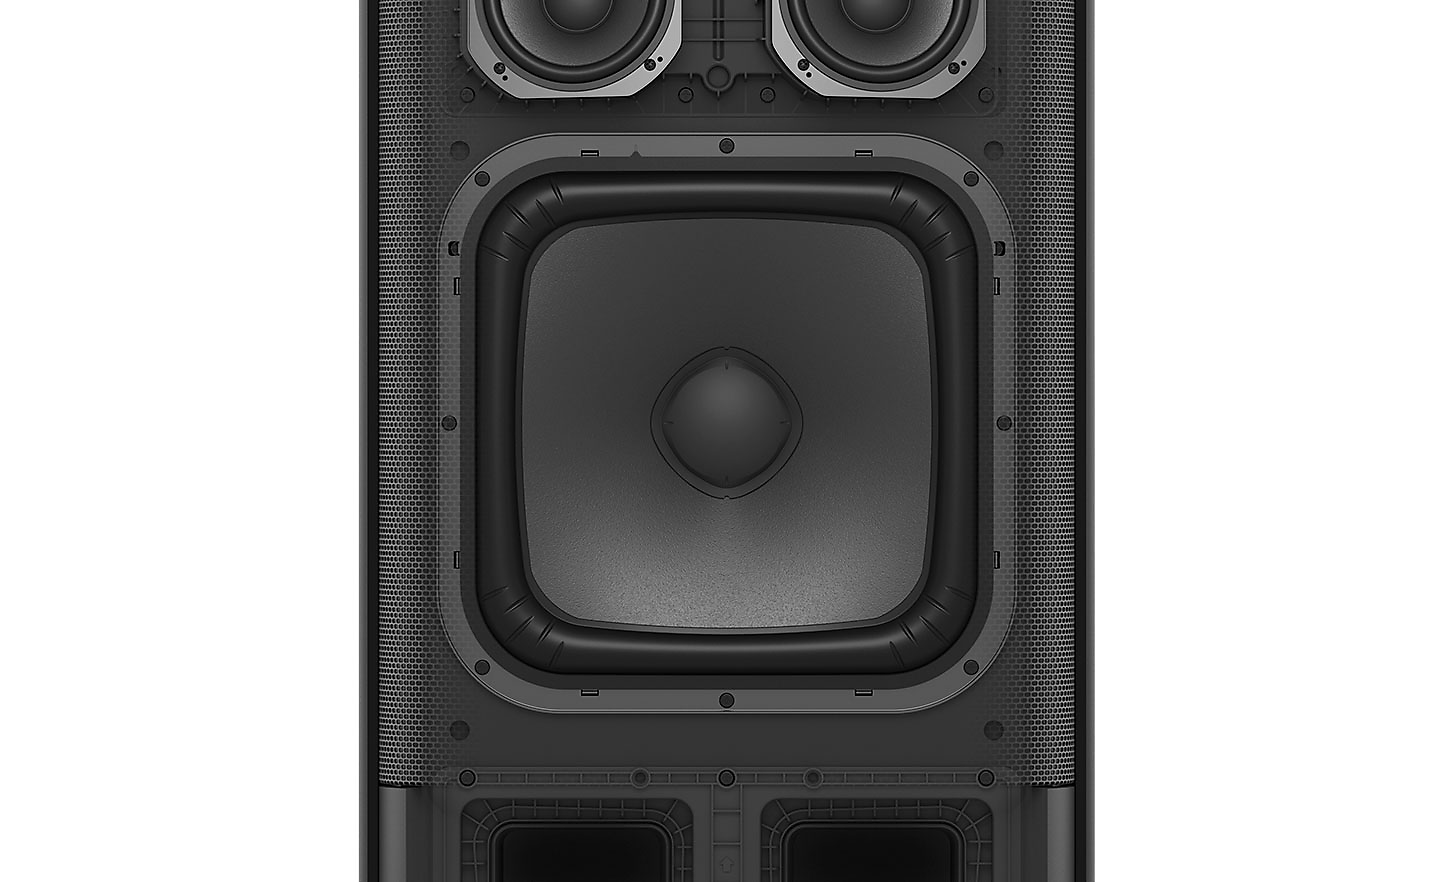 Close up image of the X-Balanced Speaker Unit